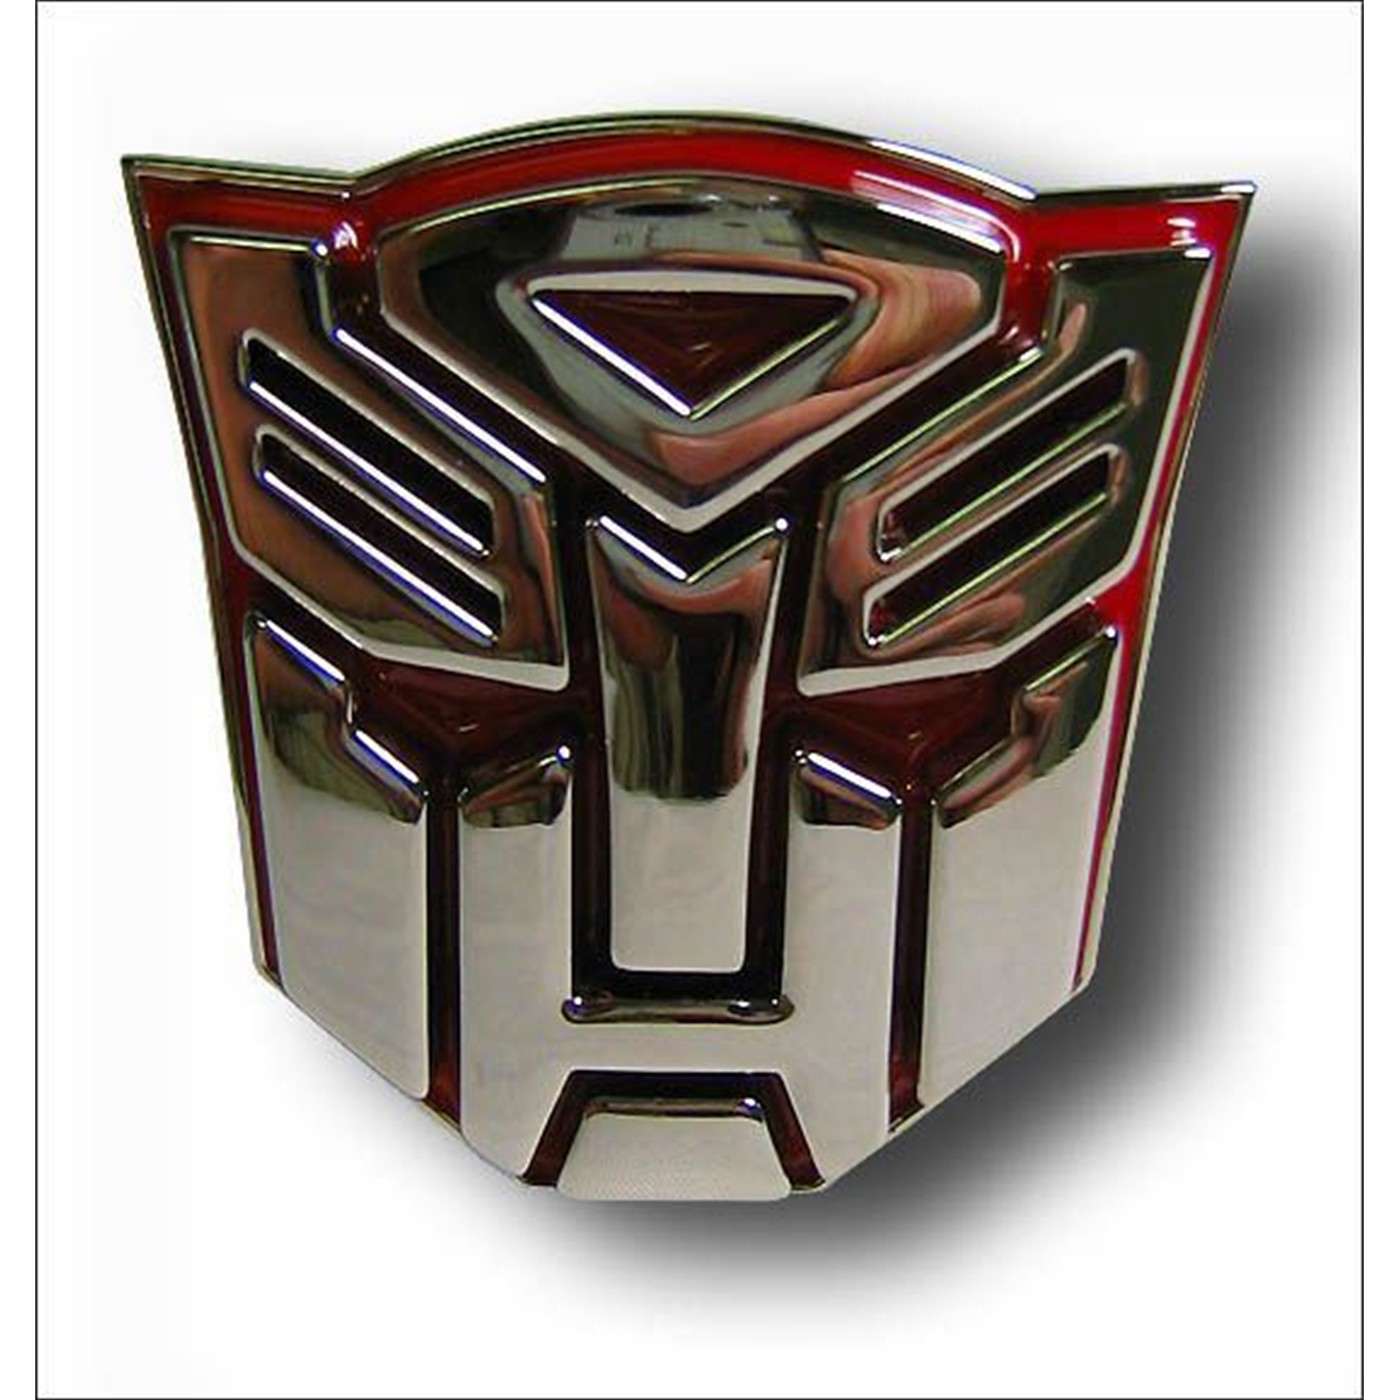 transformers autobot logo blue